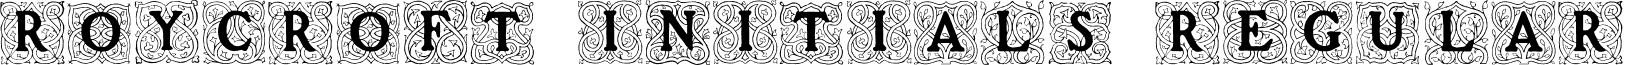 Roycroft Initials Regular font - roycroft-initials.regular.ttf